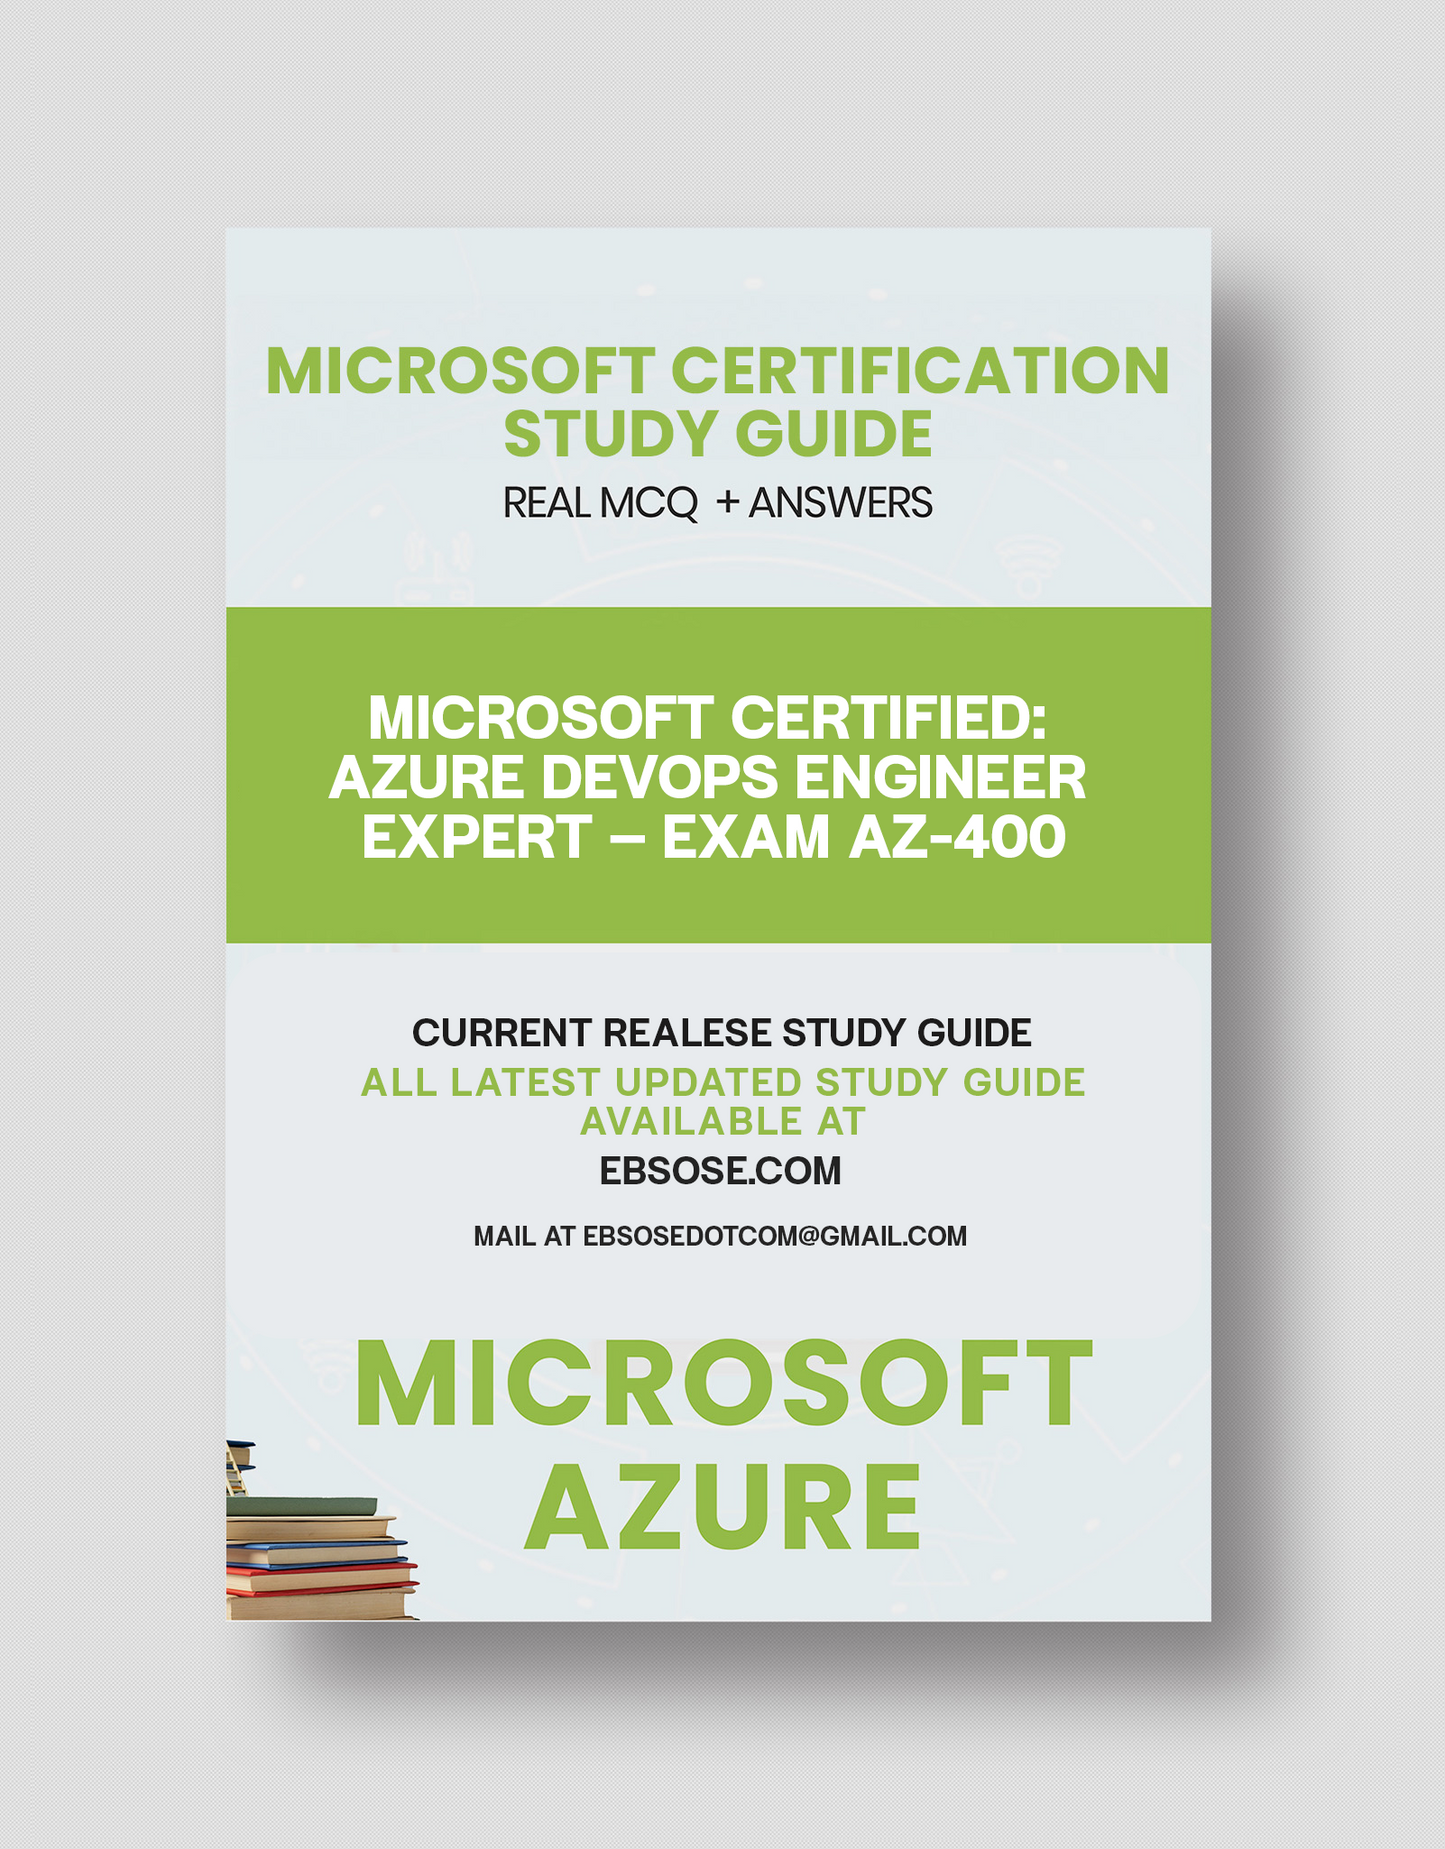 Microsoft Certified: Azure DevOps Engineer Expert – Exam AZ-400